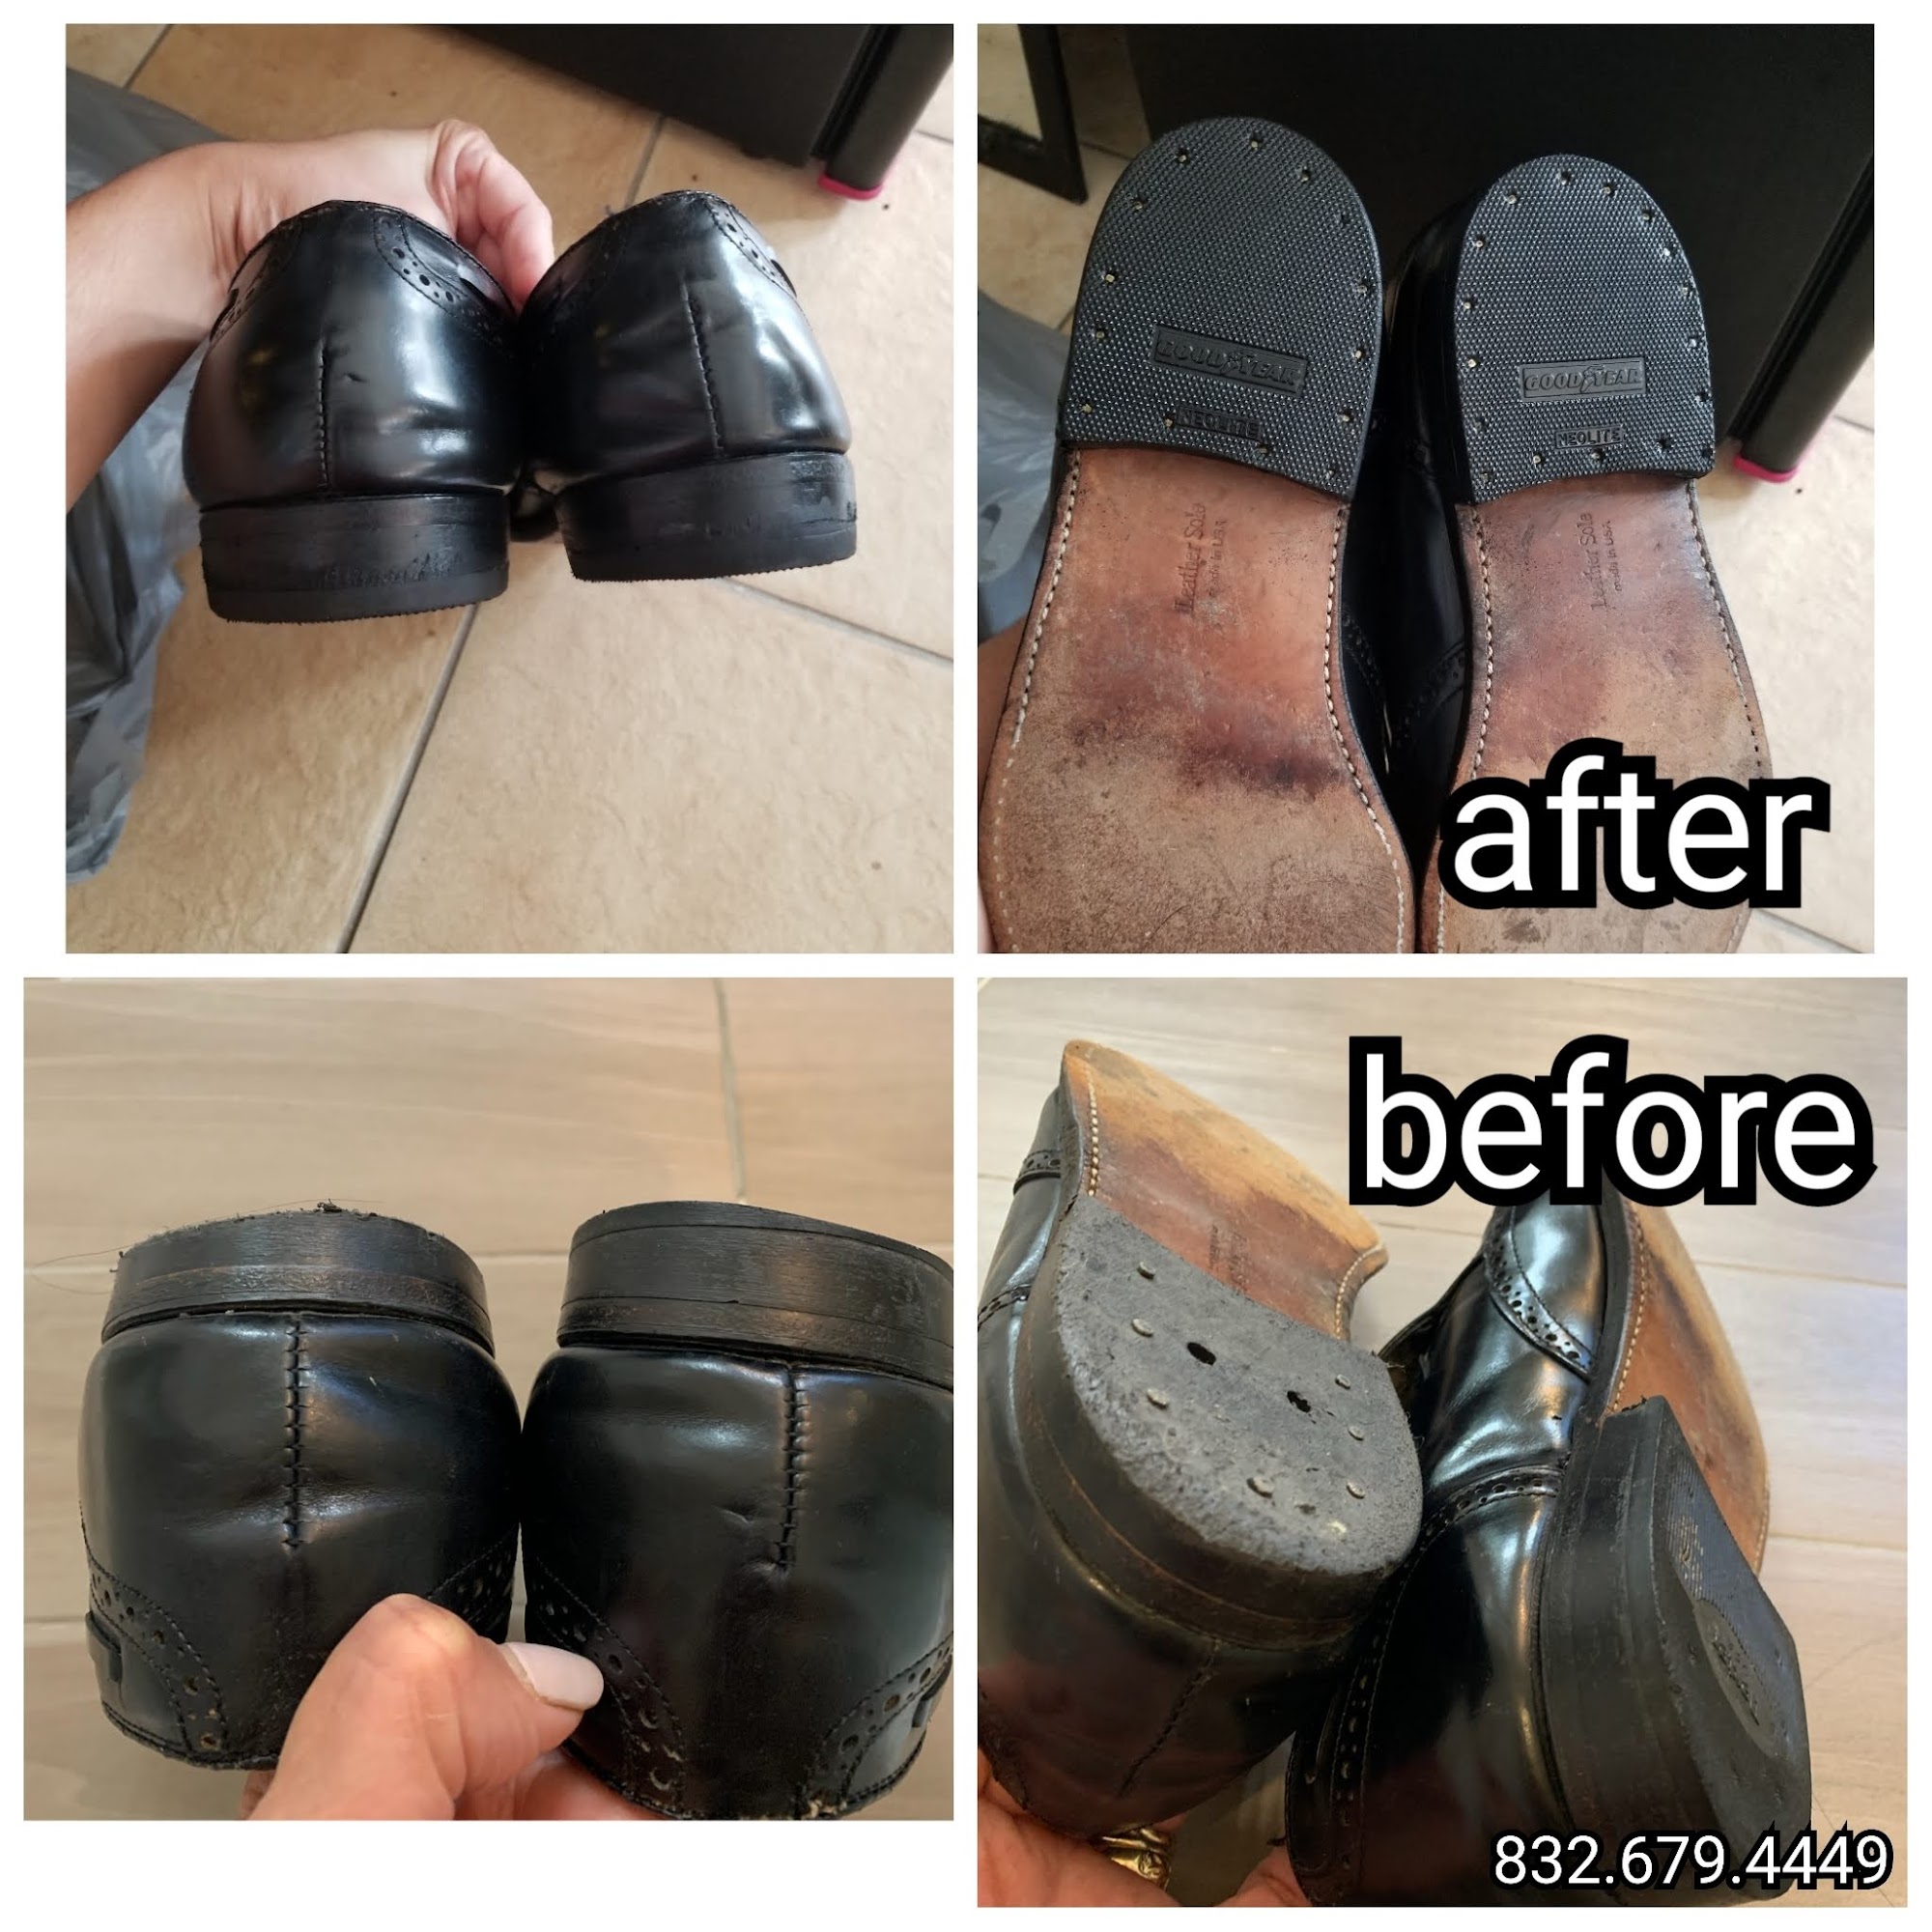 Sparkle shoe repair